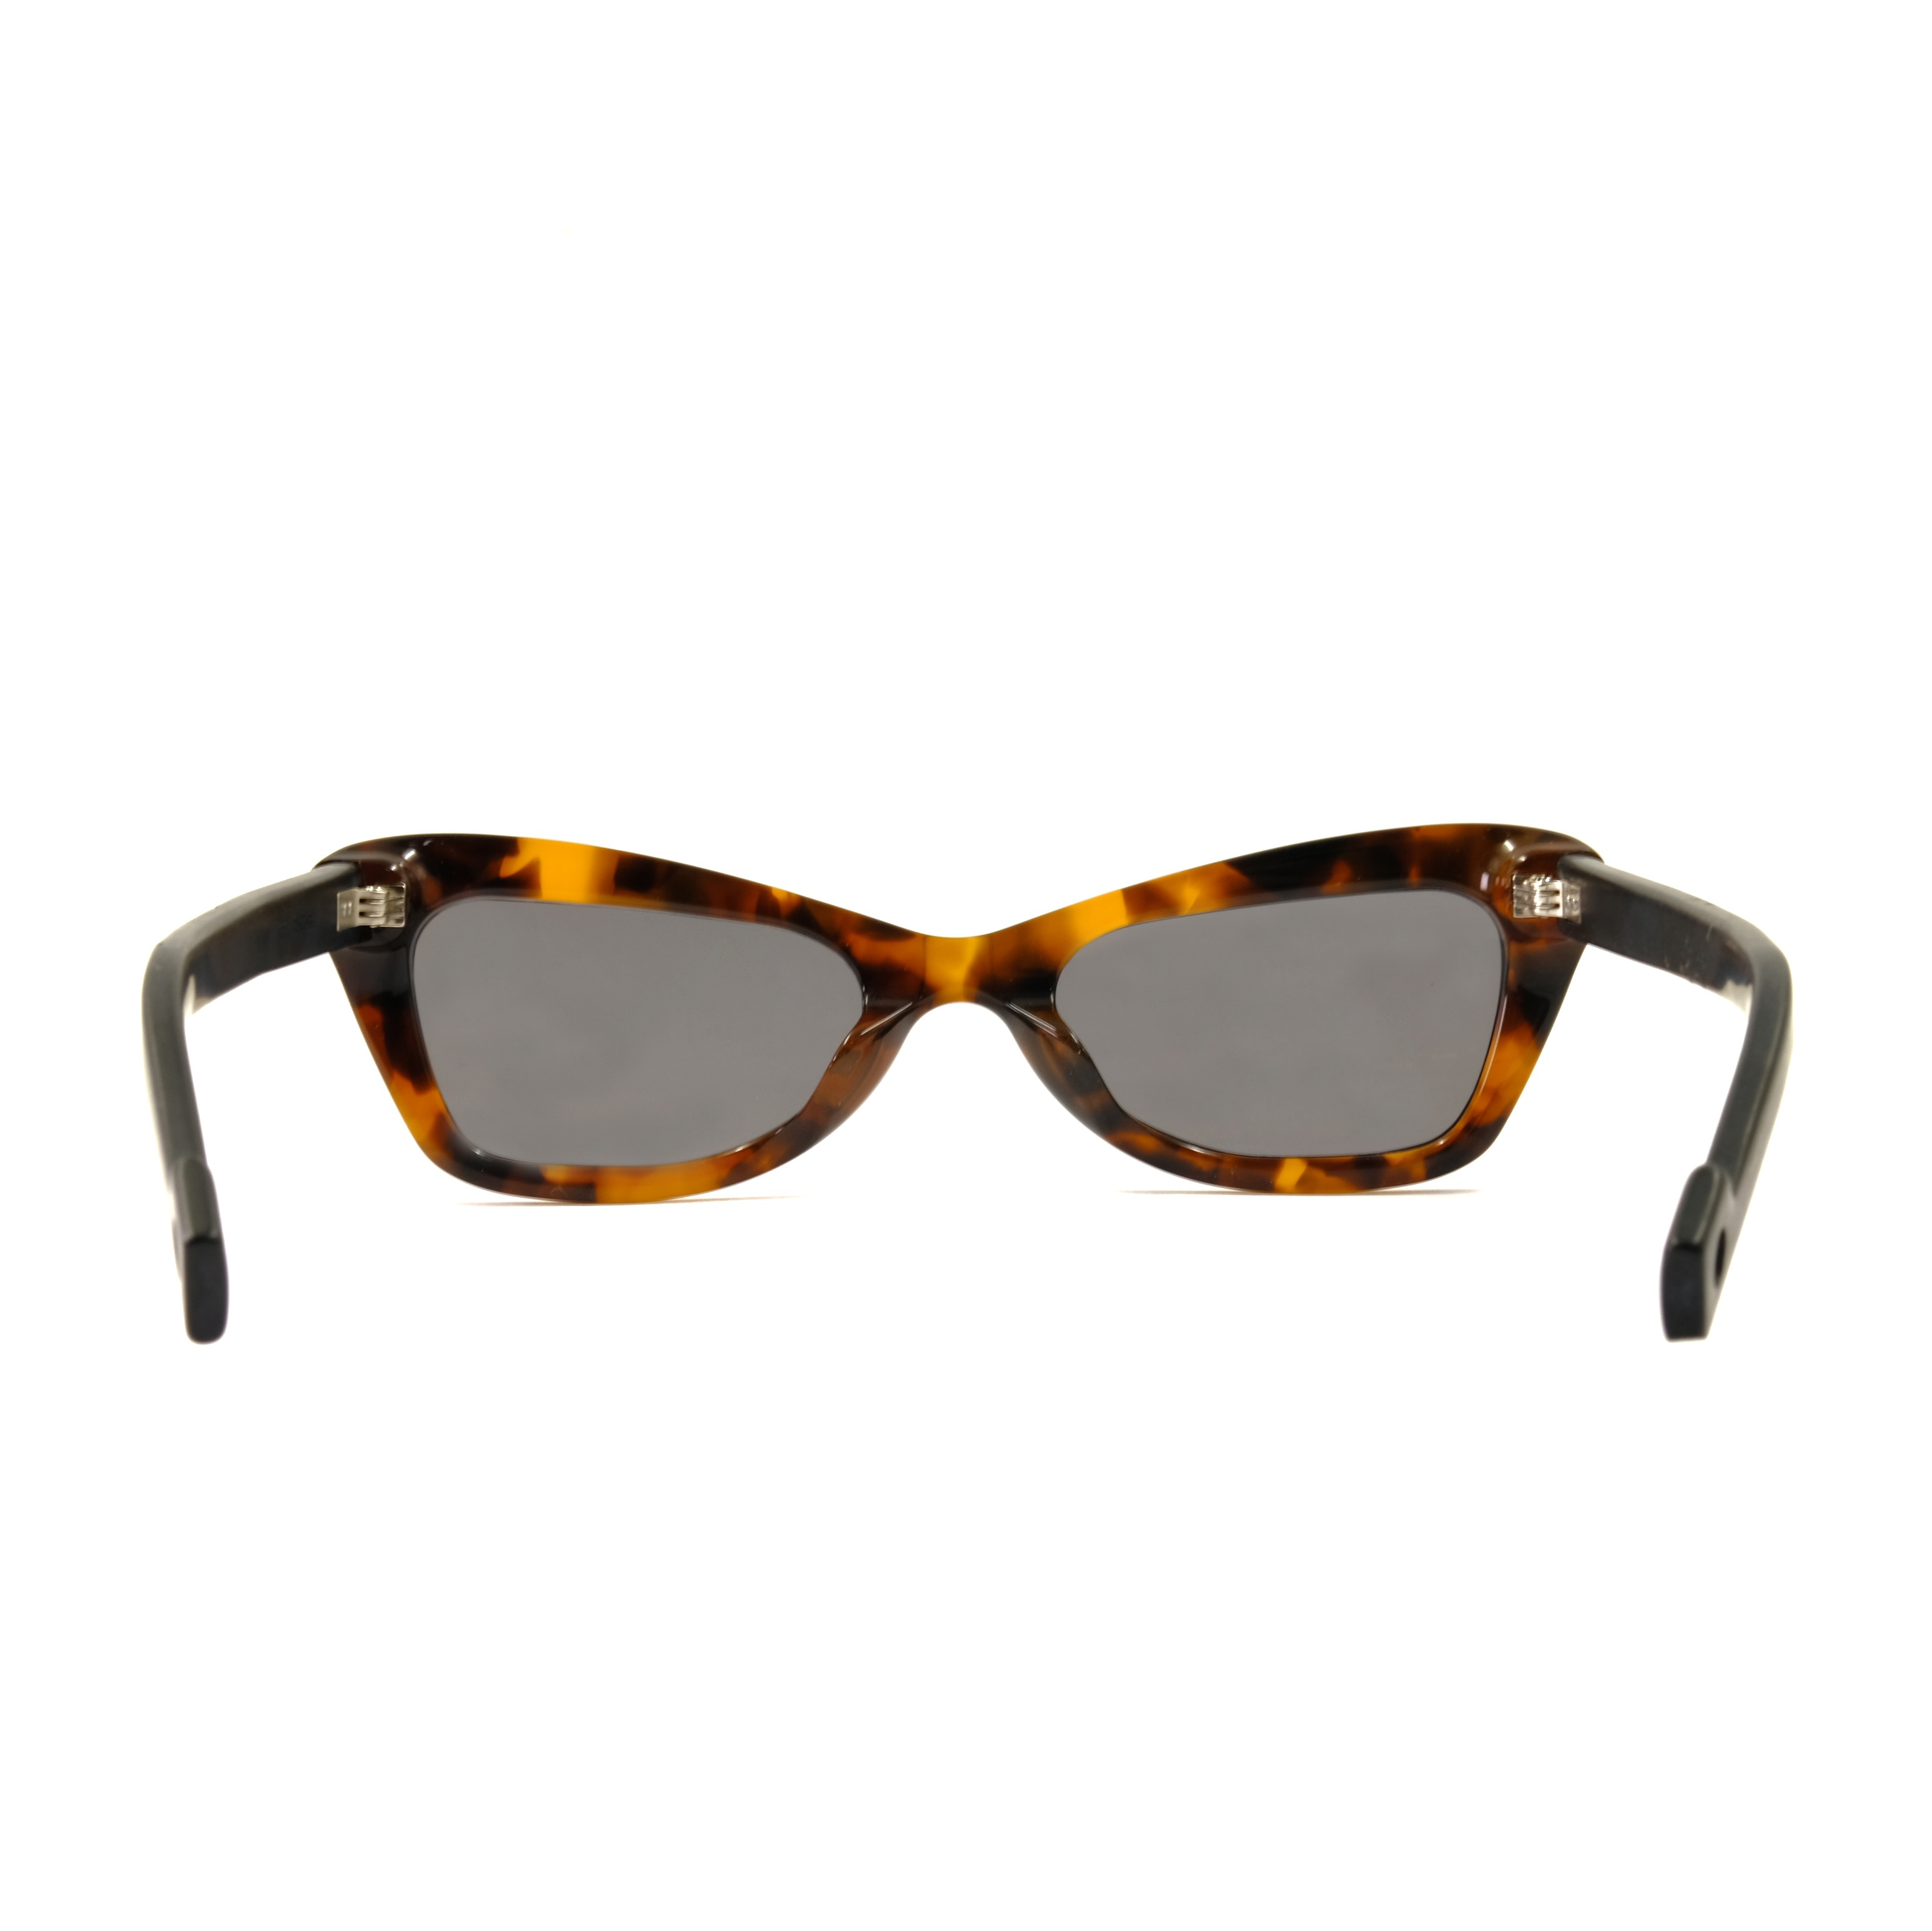 Sun Glasses River Acetate Cat Eye Glasses Polarized Sunglasses Bespoke Sunglasses Supplier China